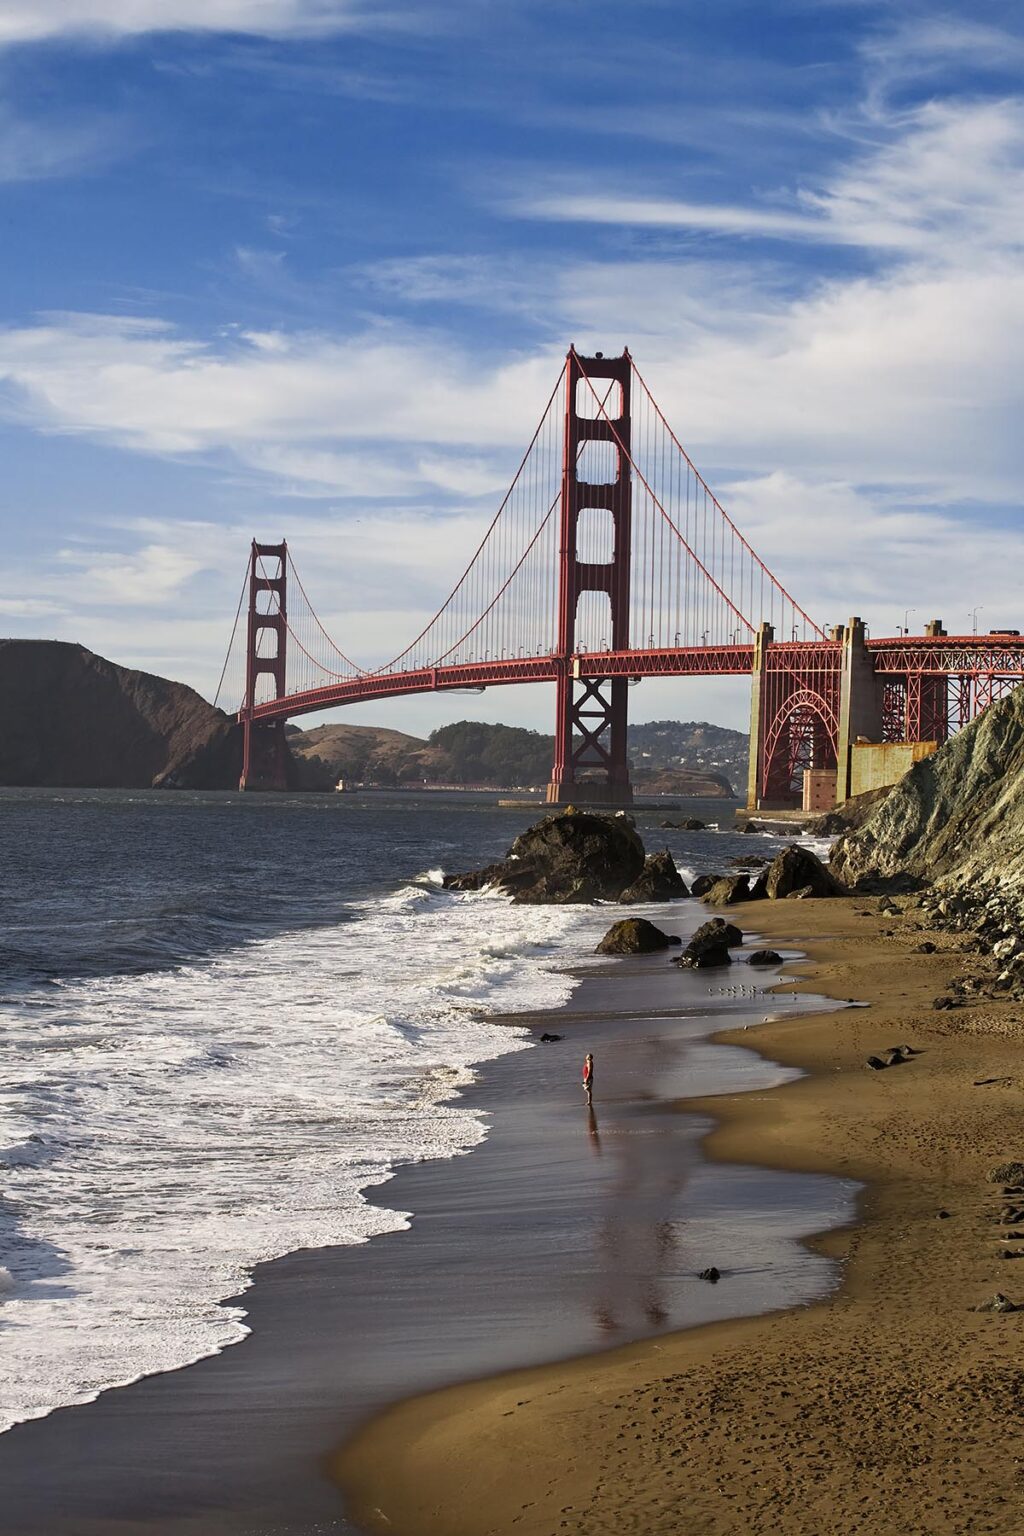 THE GOLDEN GATE BRIDGE as seen from BAKER BEACH - SAN FRANCISCO, CALIFORNIA